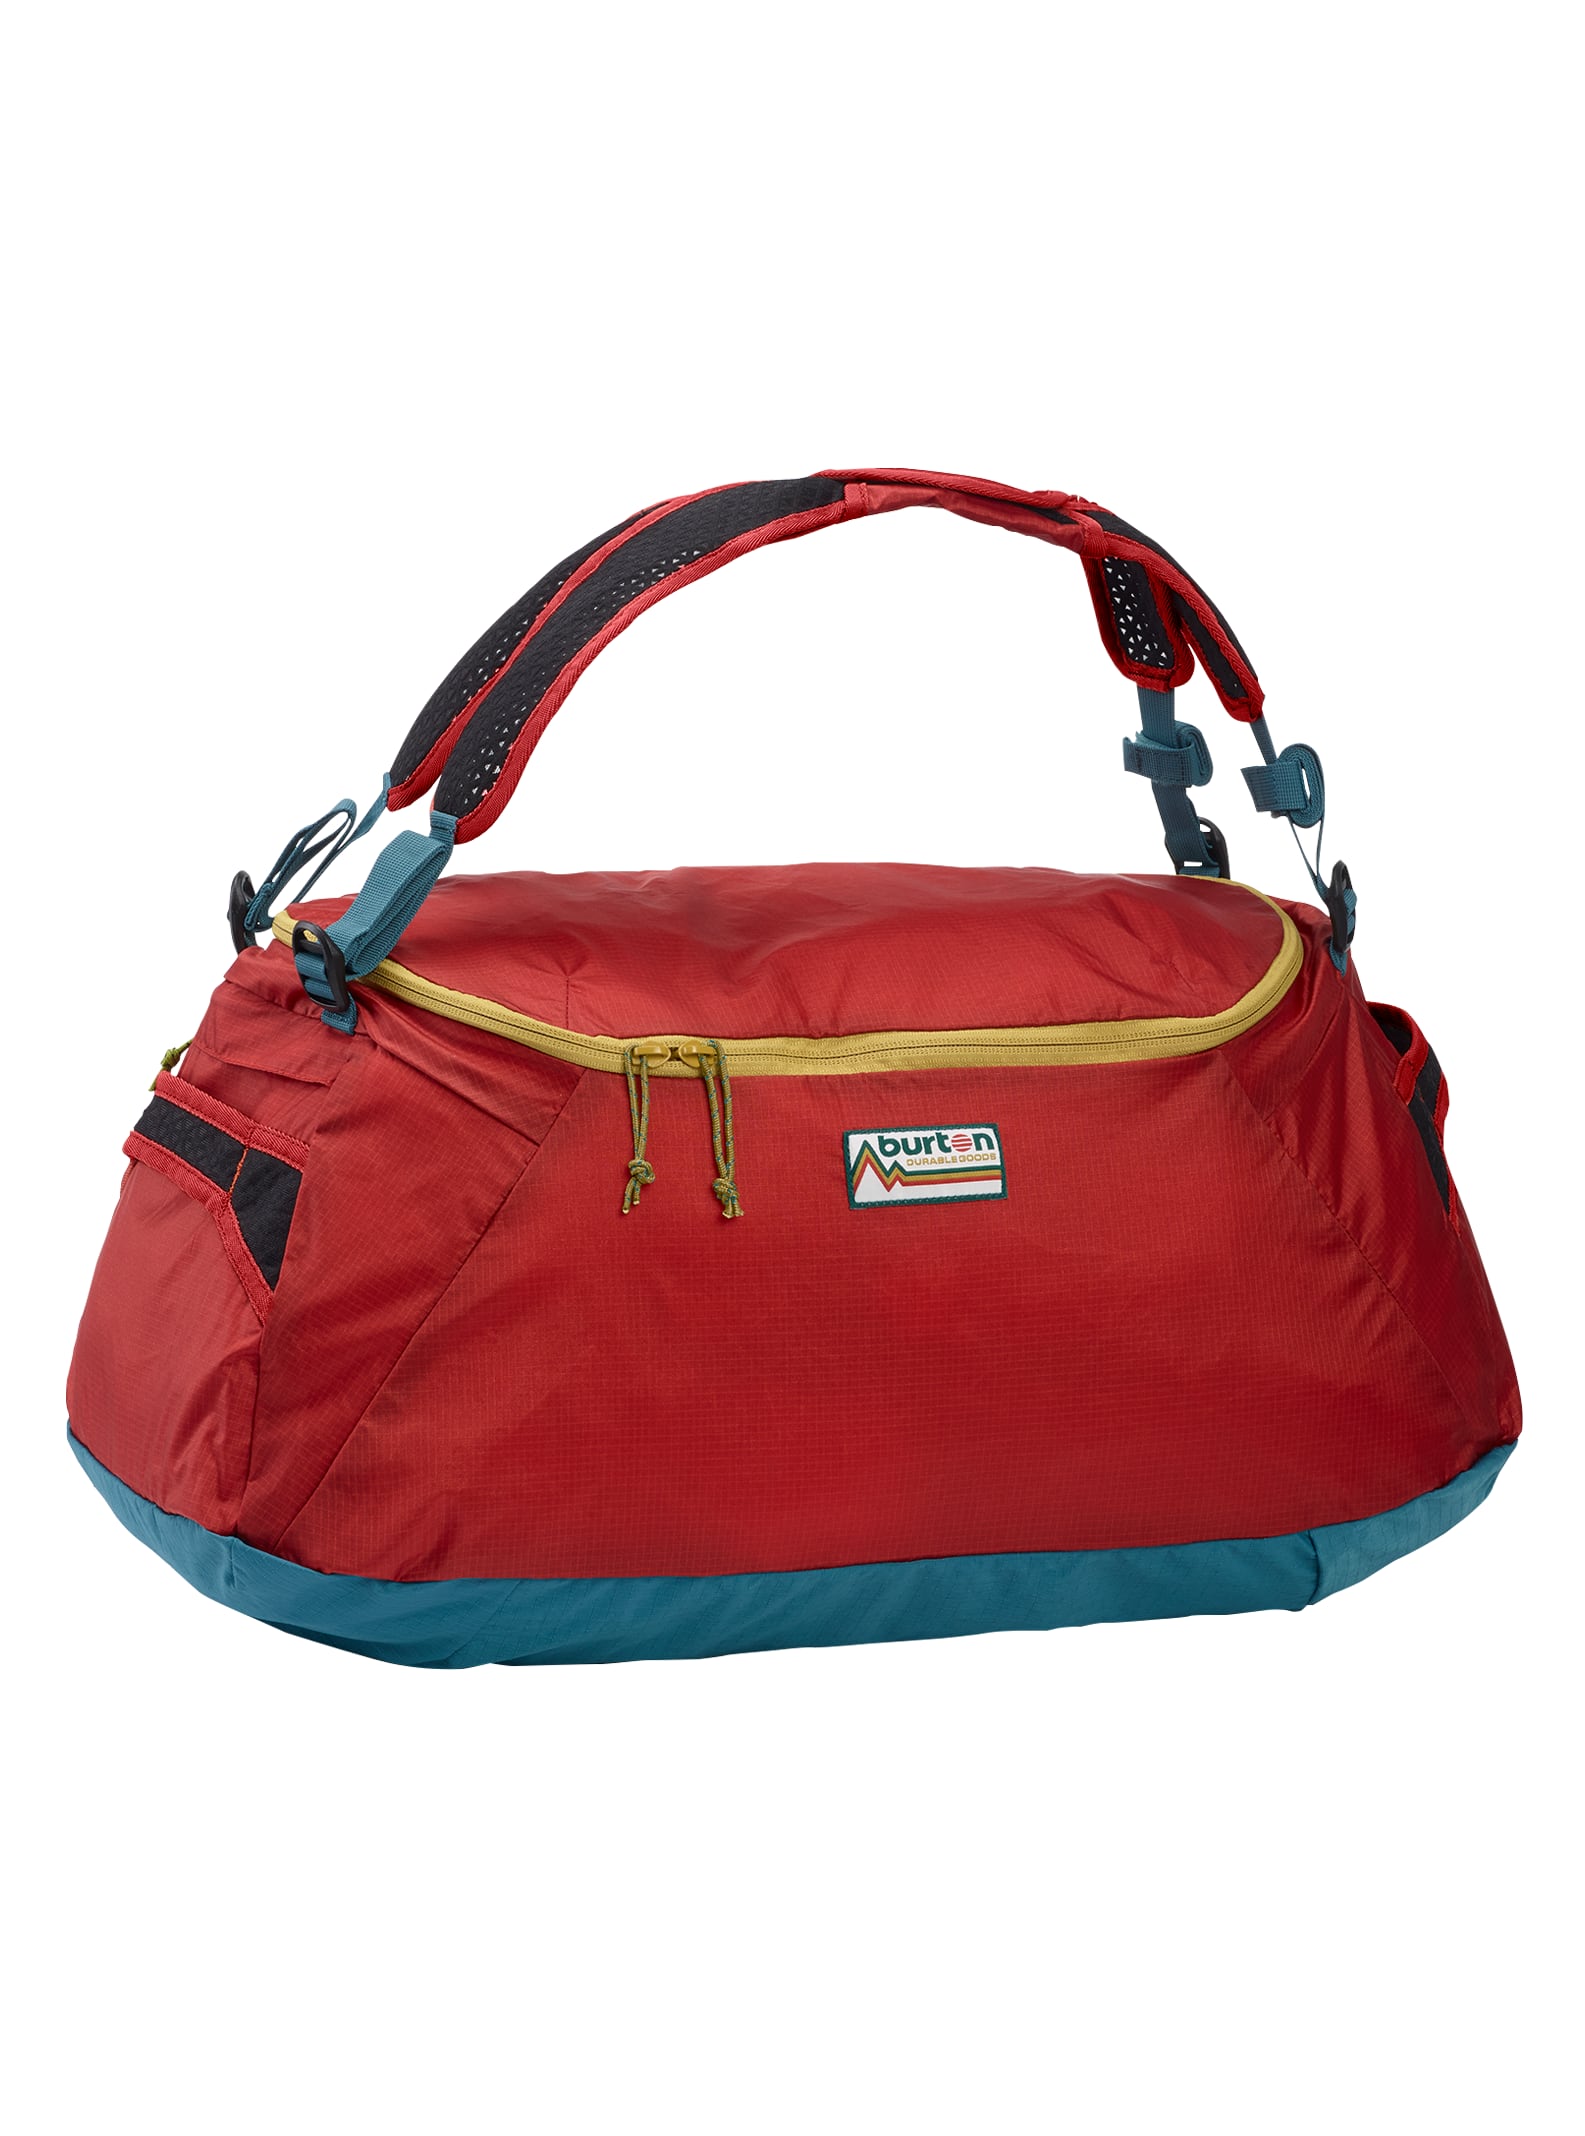 Burton Multipath Packable 40L Duffel Bag | Burton.com Spring / Summer 2019  US